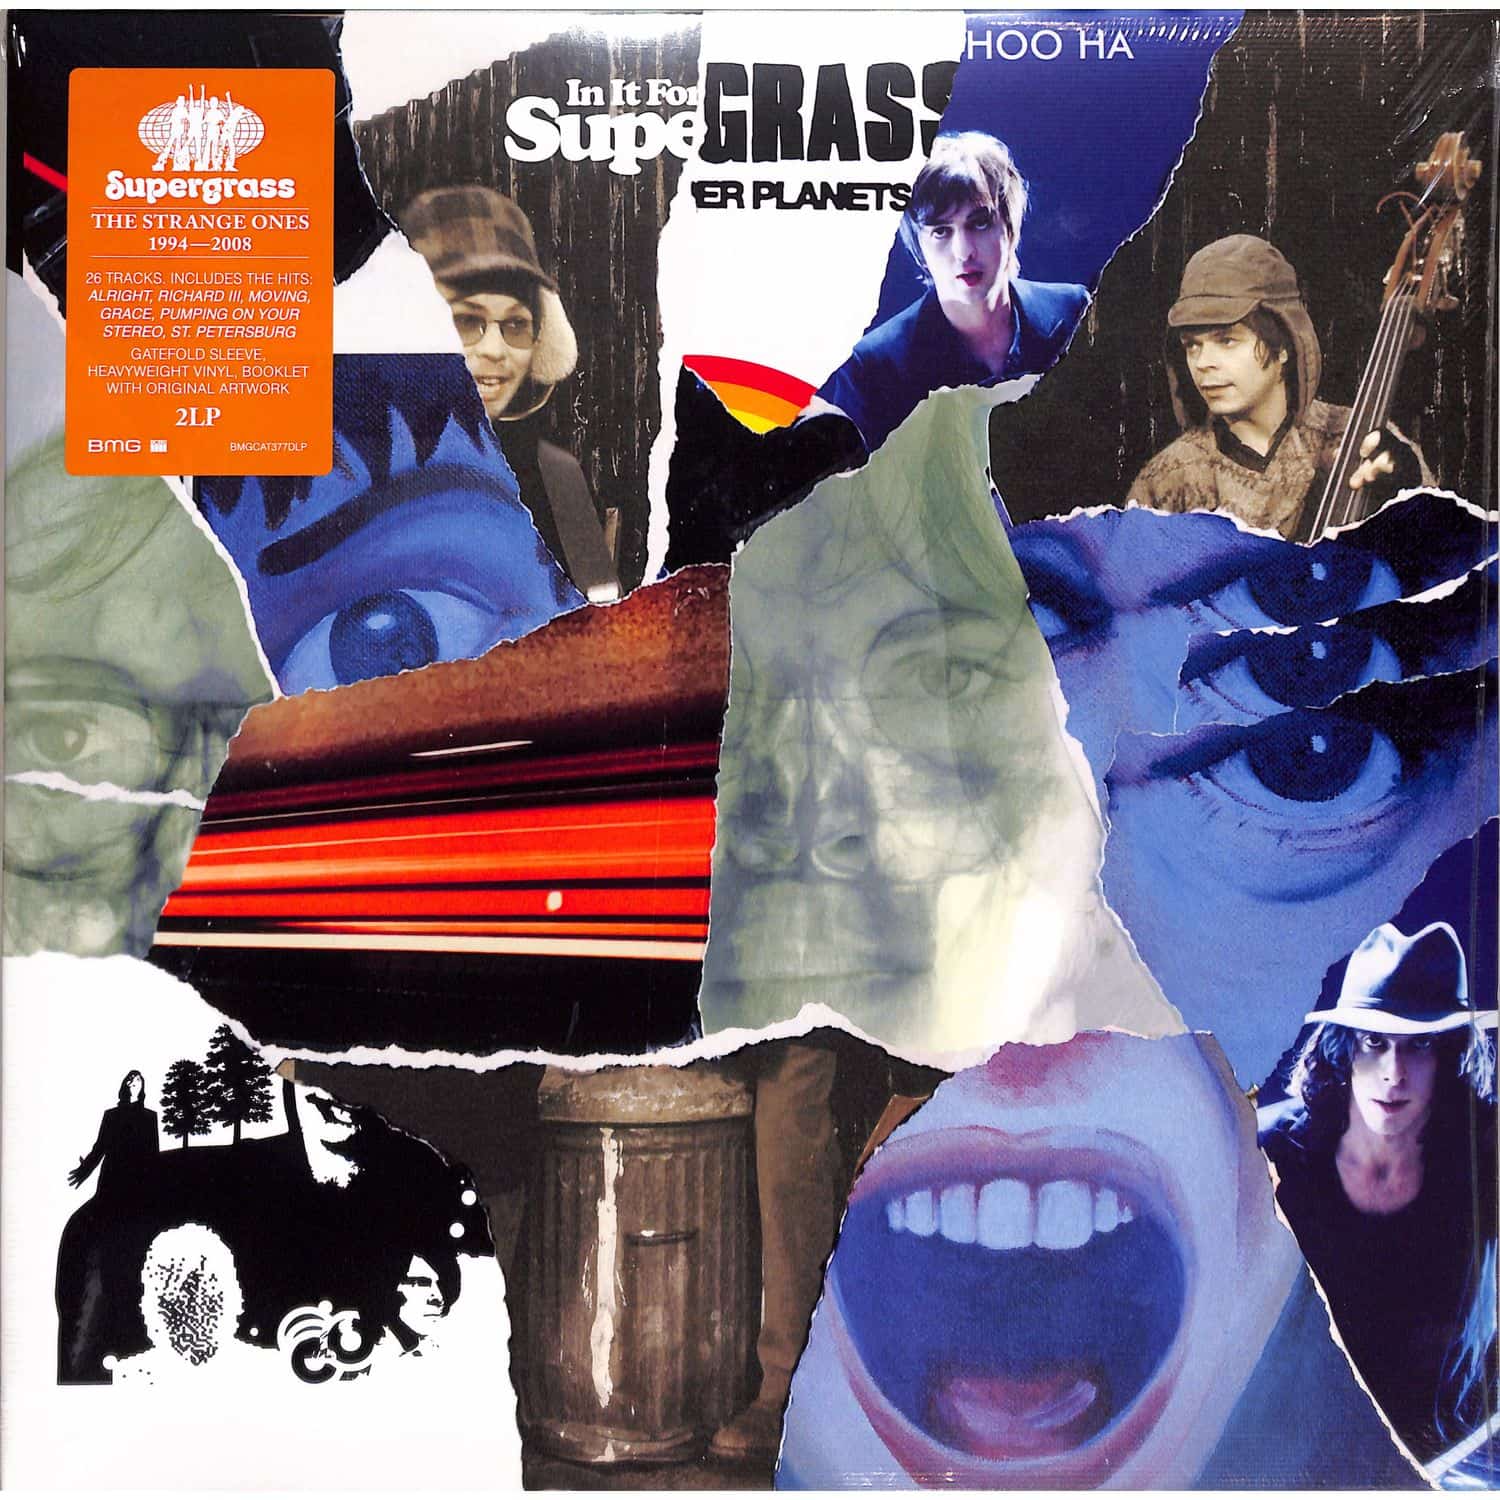 Supergrass - THE STRANGE ONES:1994-2008 